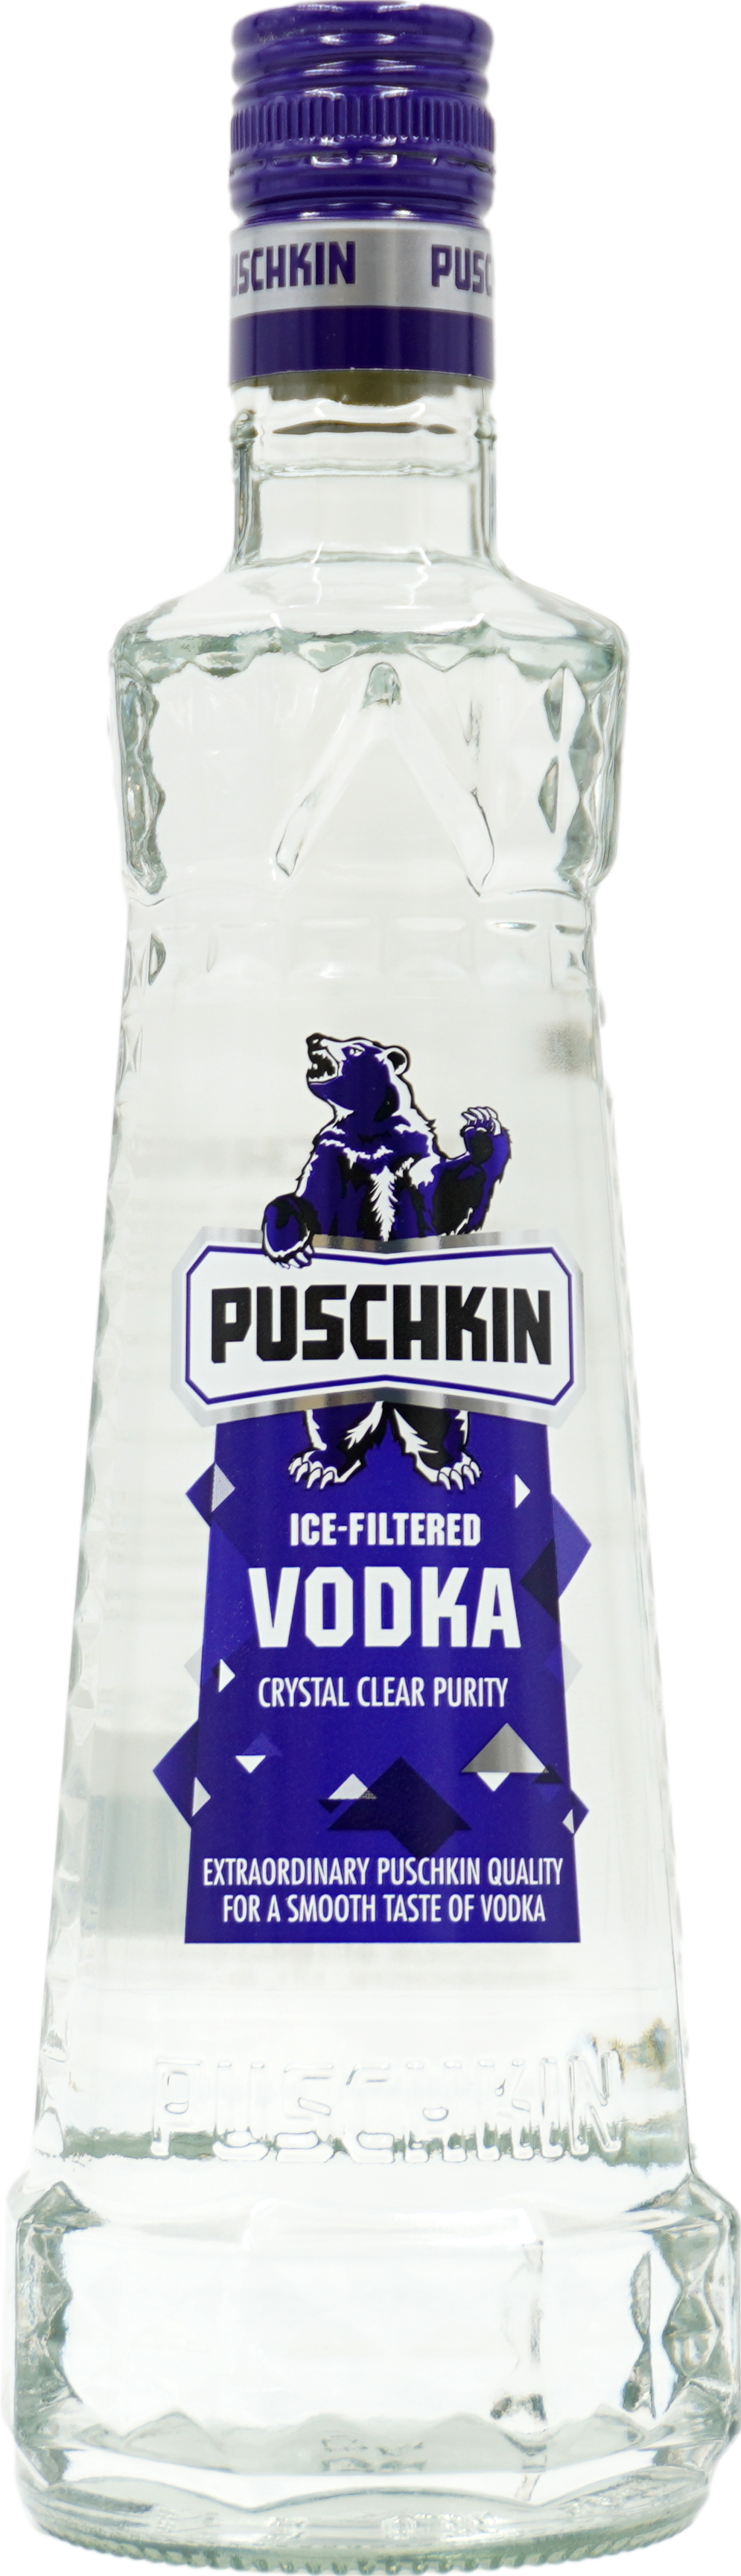 Wodka Getränke-Service Spirituosen | | Puschkin | 37,5% Vodka KACHOURI